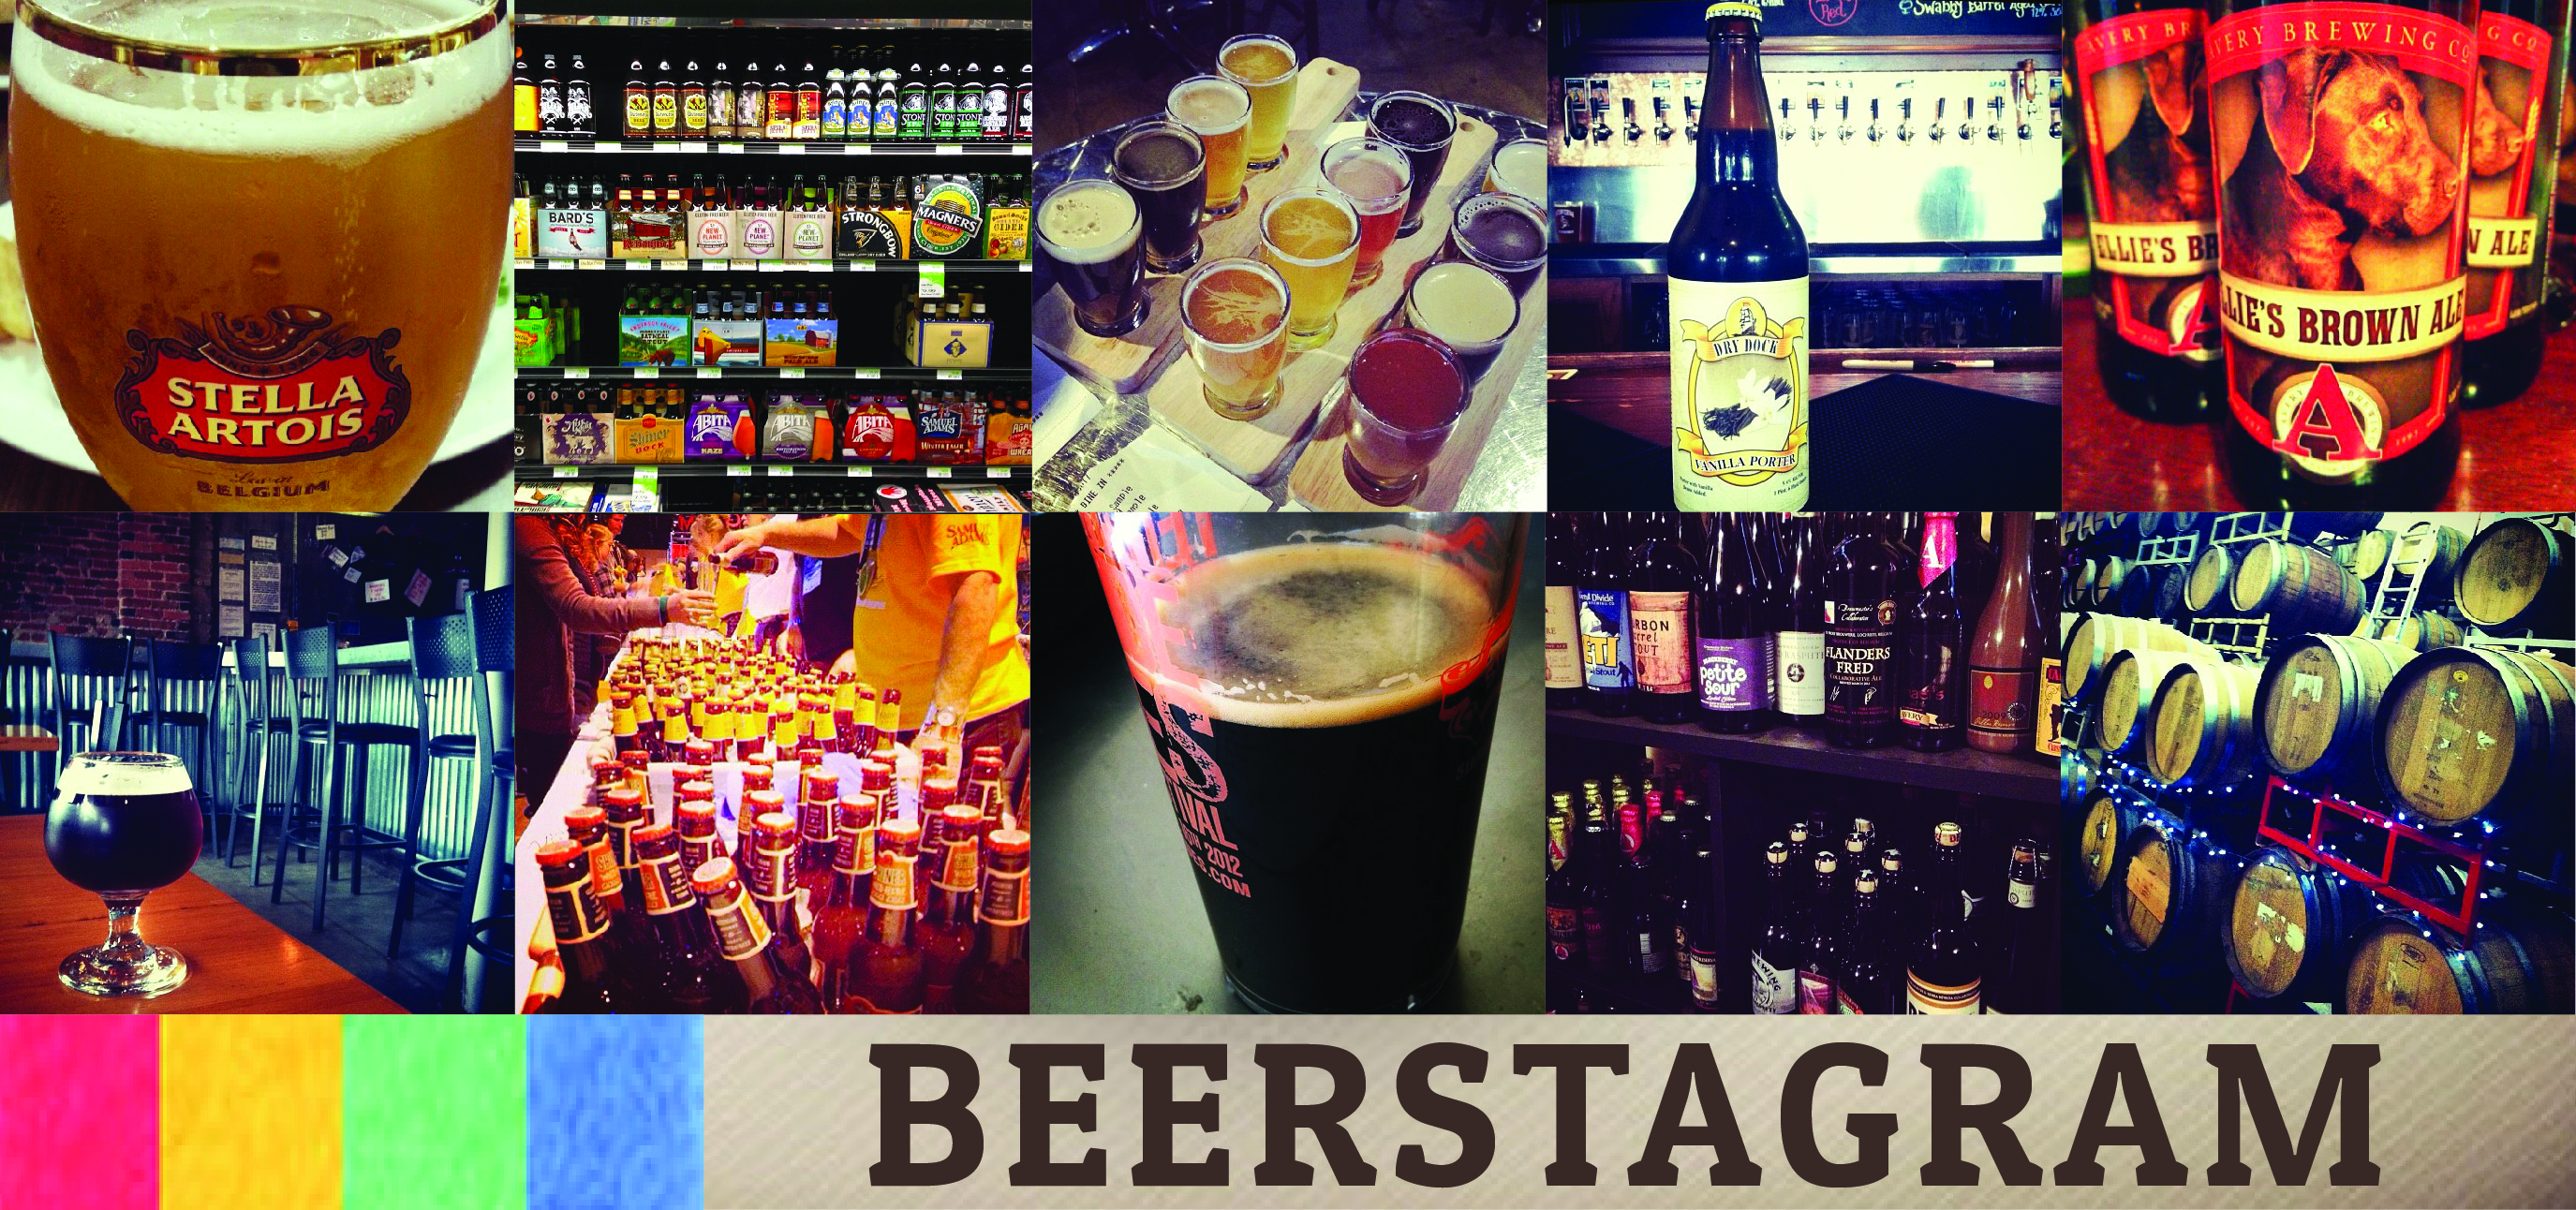 Beerstagrams 1/25- 2/1